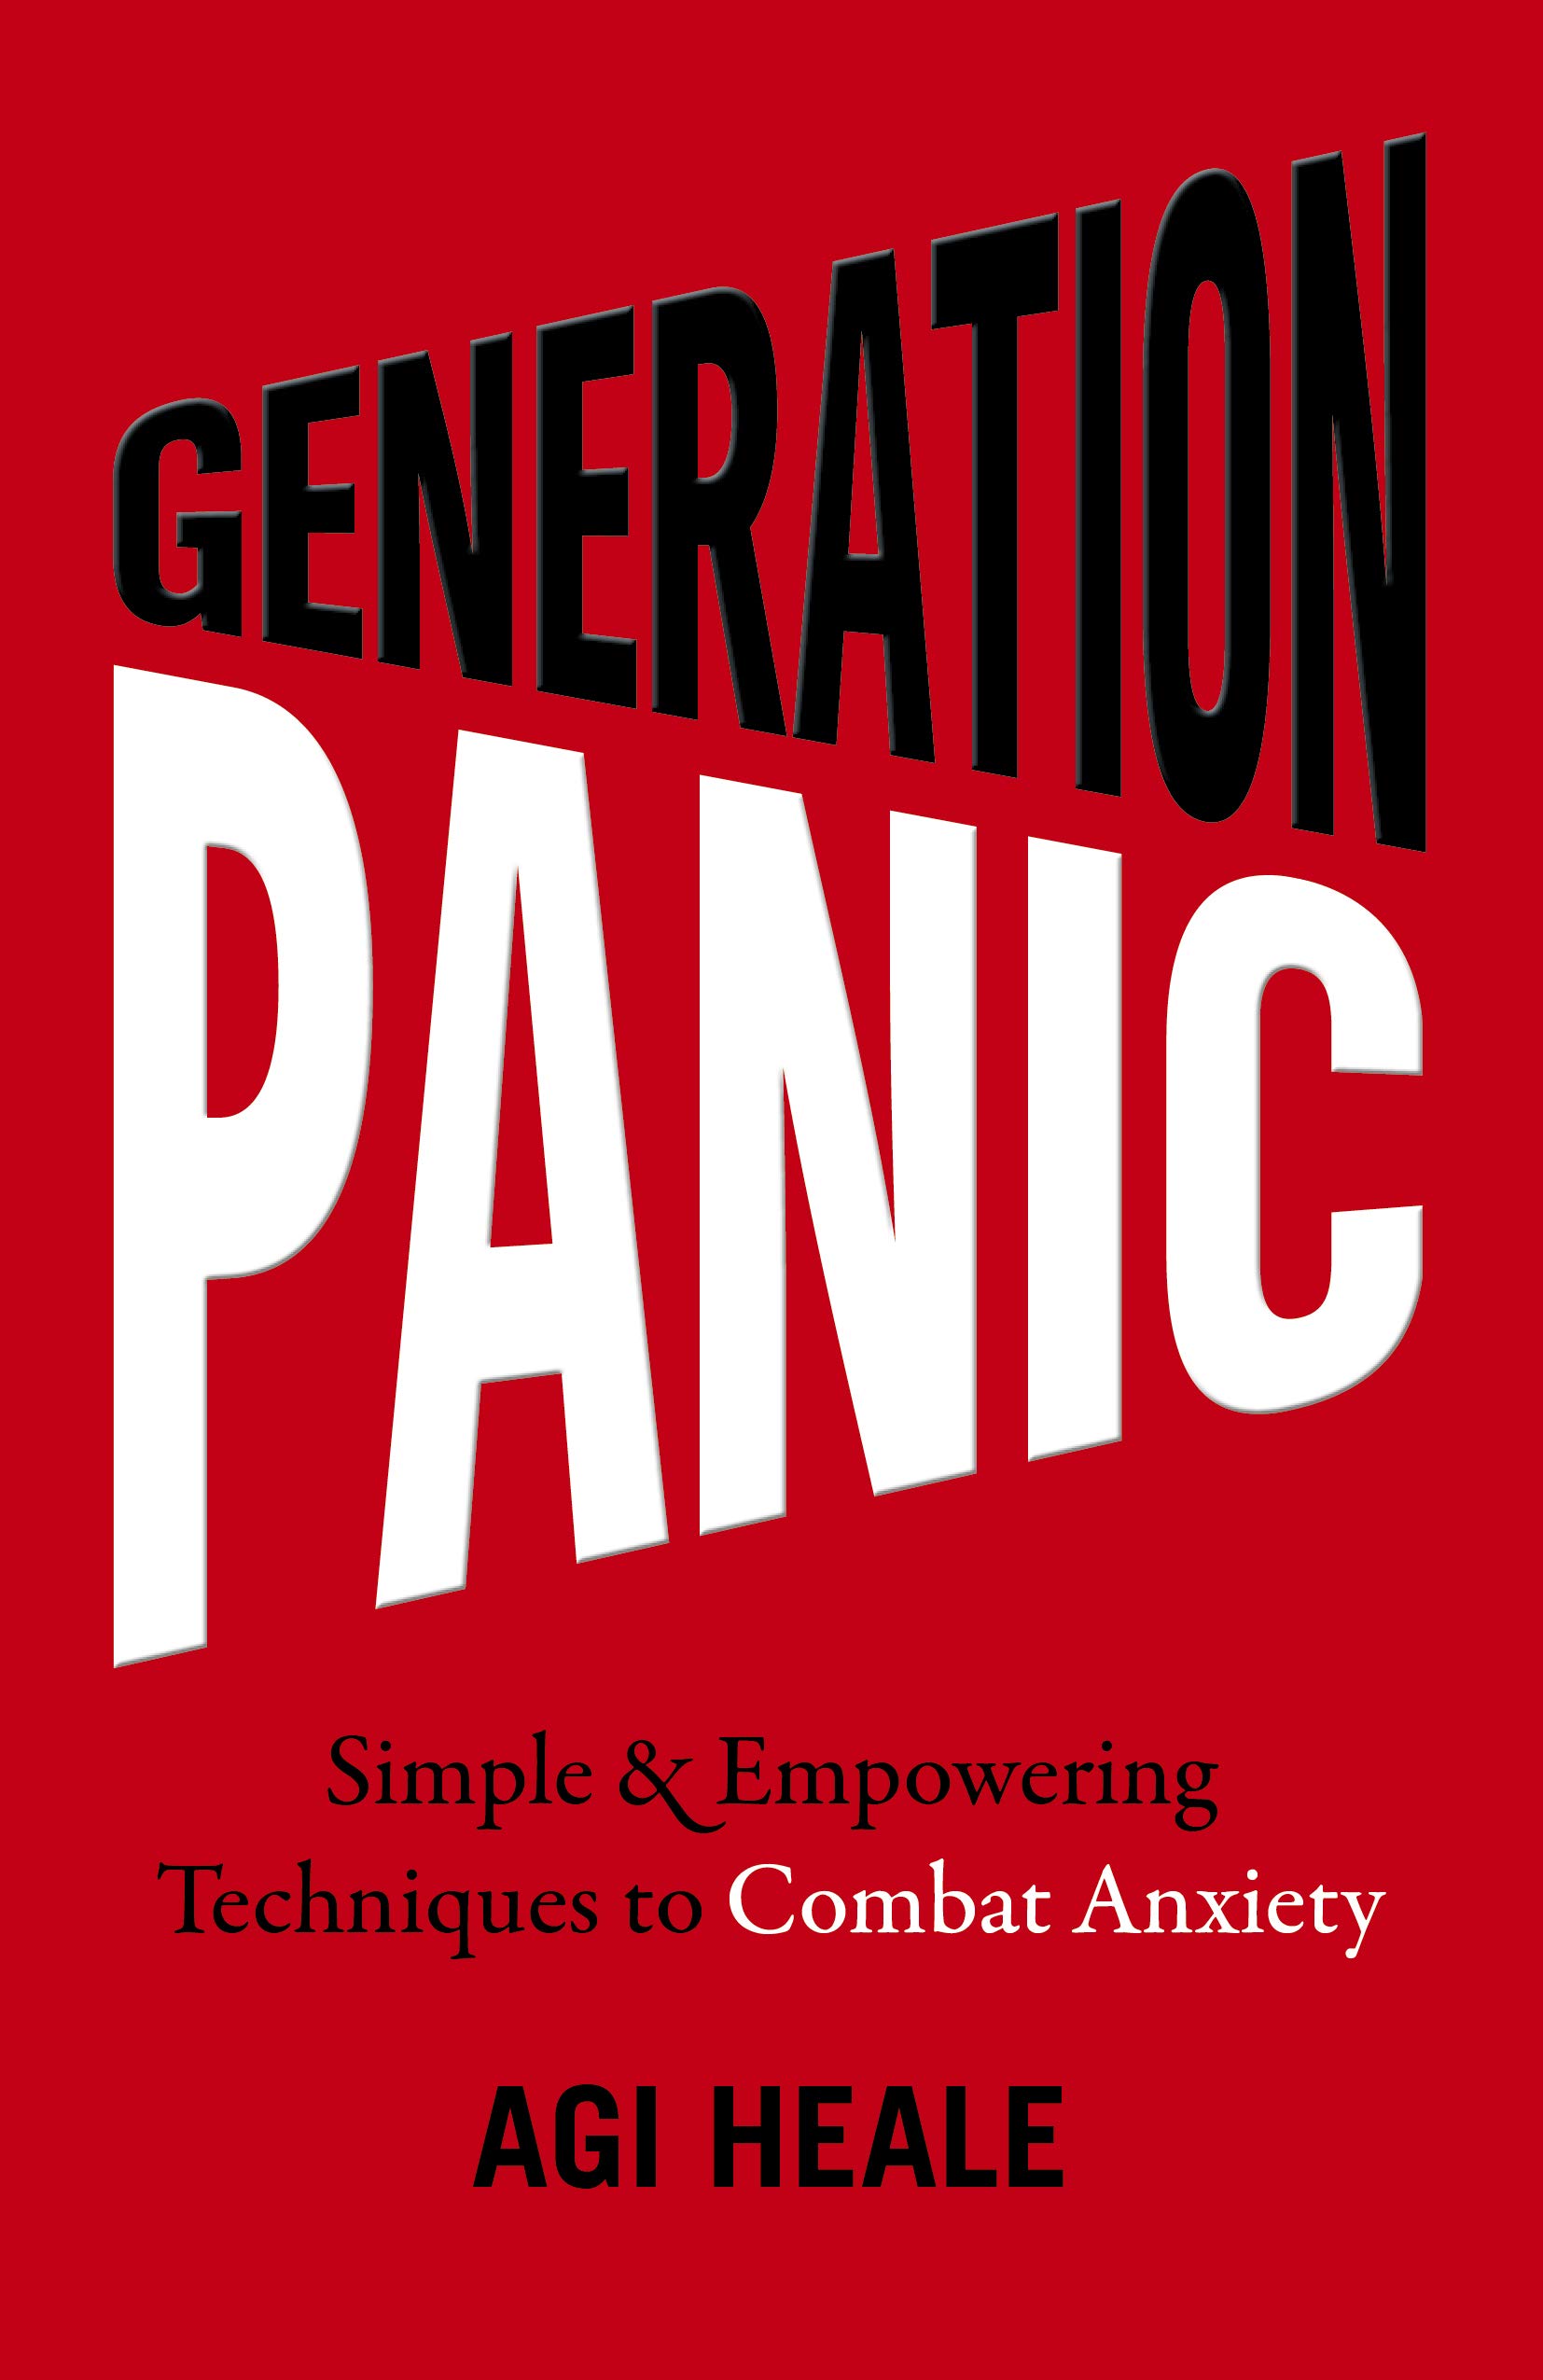 Generation Panic